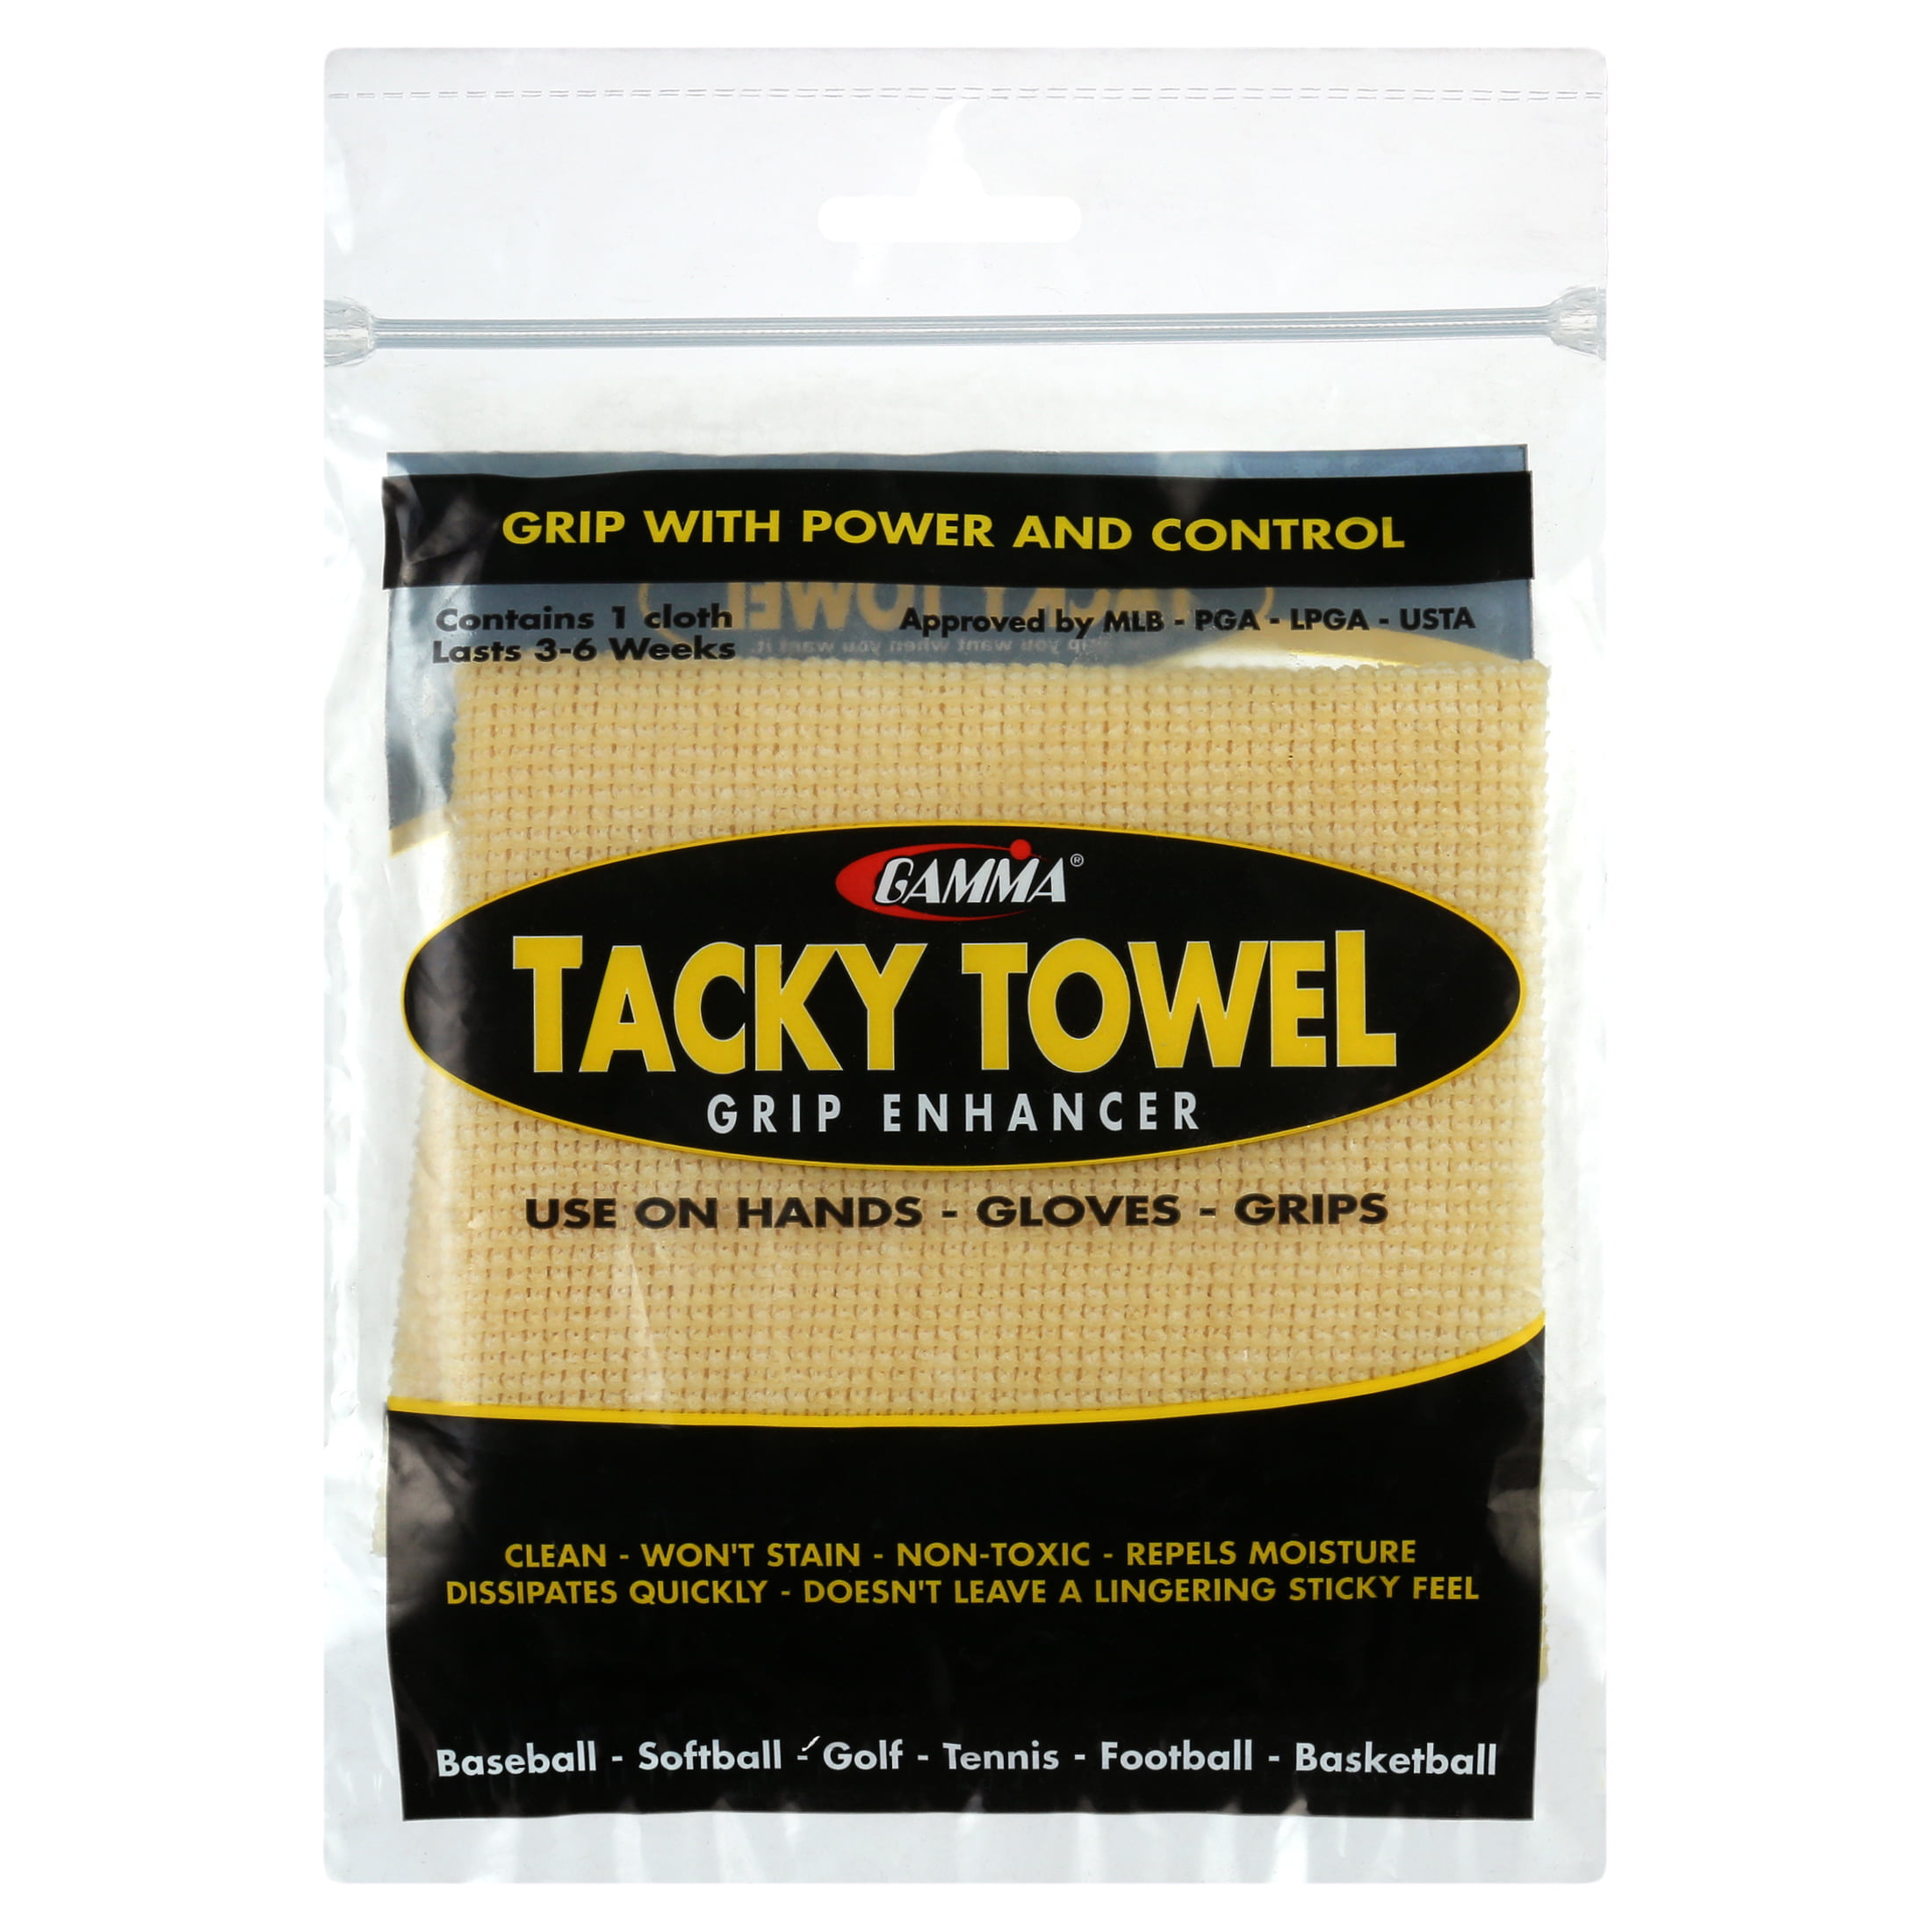  GELFORT Tacky Towel for Tennis, Grip Enhancer for Golf